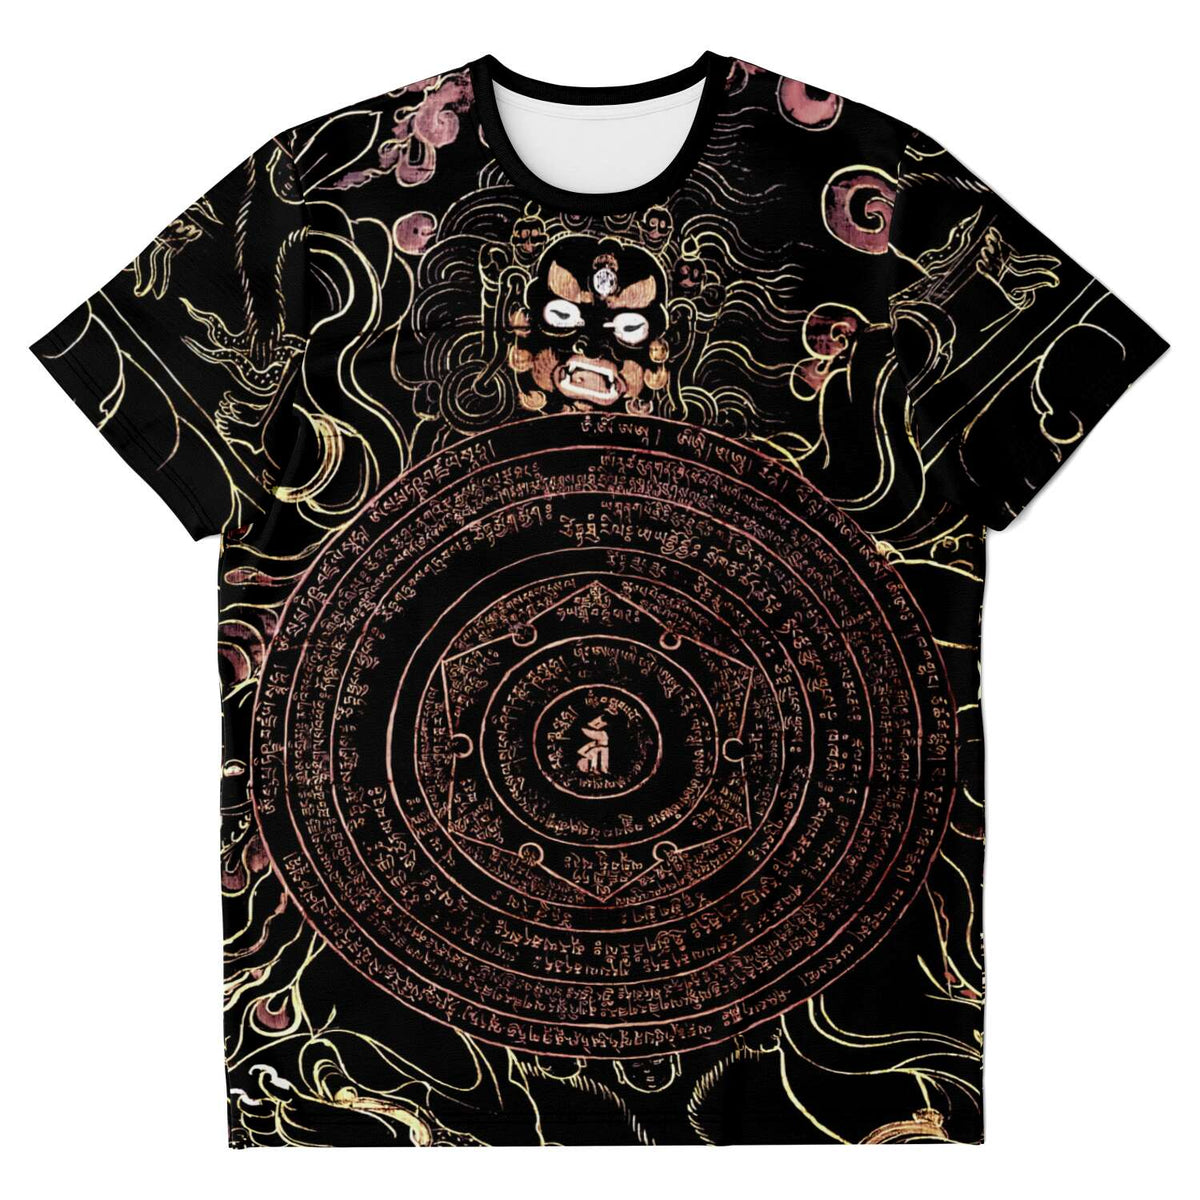 AOP T-Shirt XS The Wheel of Dharma (The Dharma Chakra) Antique Hindu and Buddhist Deity Supernatural Hindu Thangka Graphic Art T-Shirt Tee